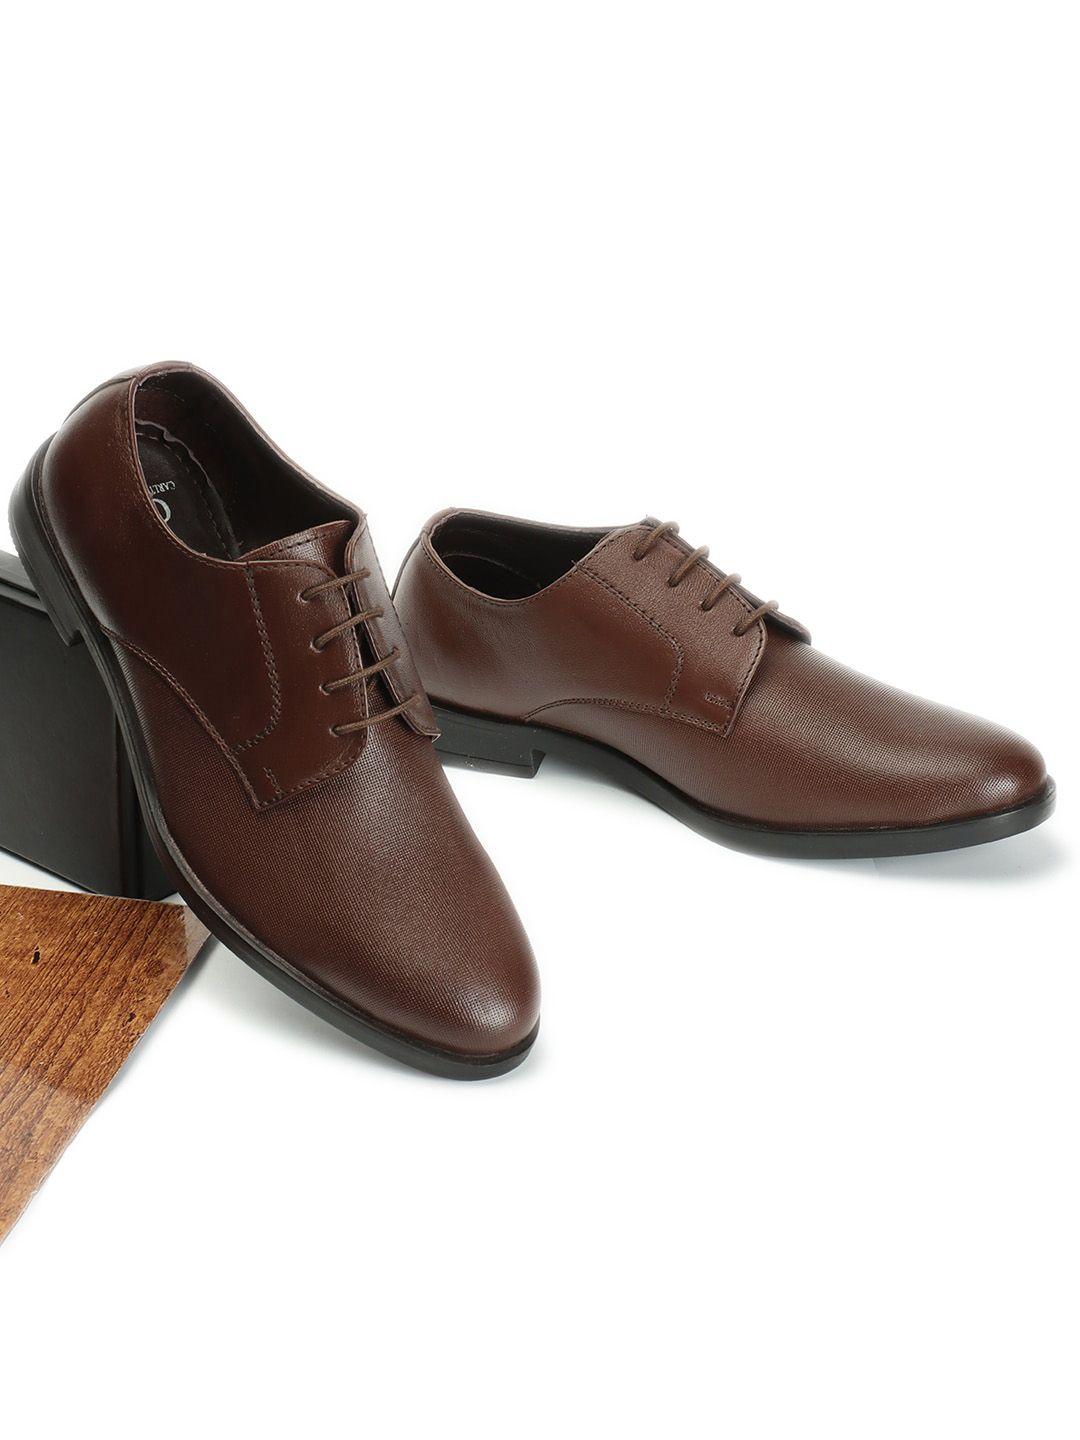 carlton-london-men-textured-leather-formal-derbys